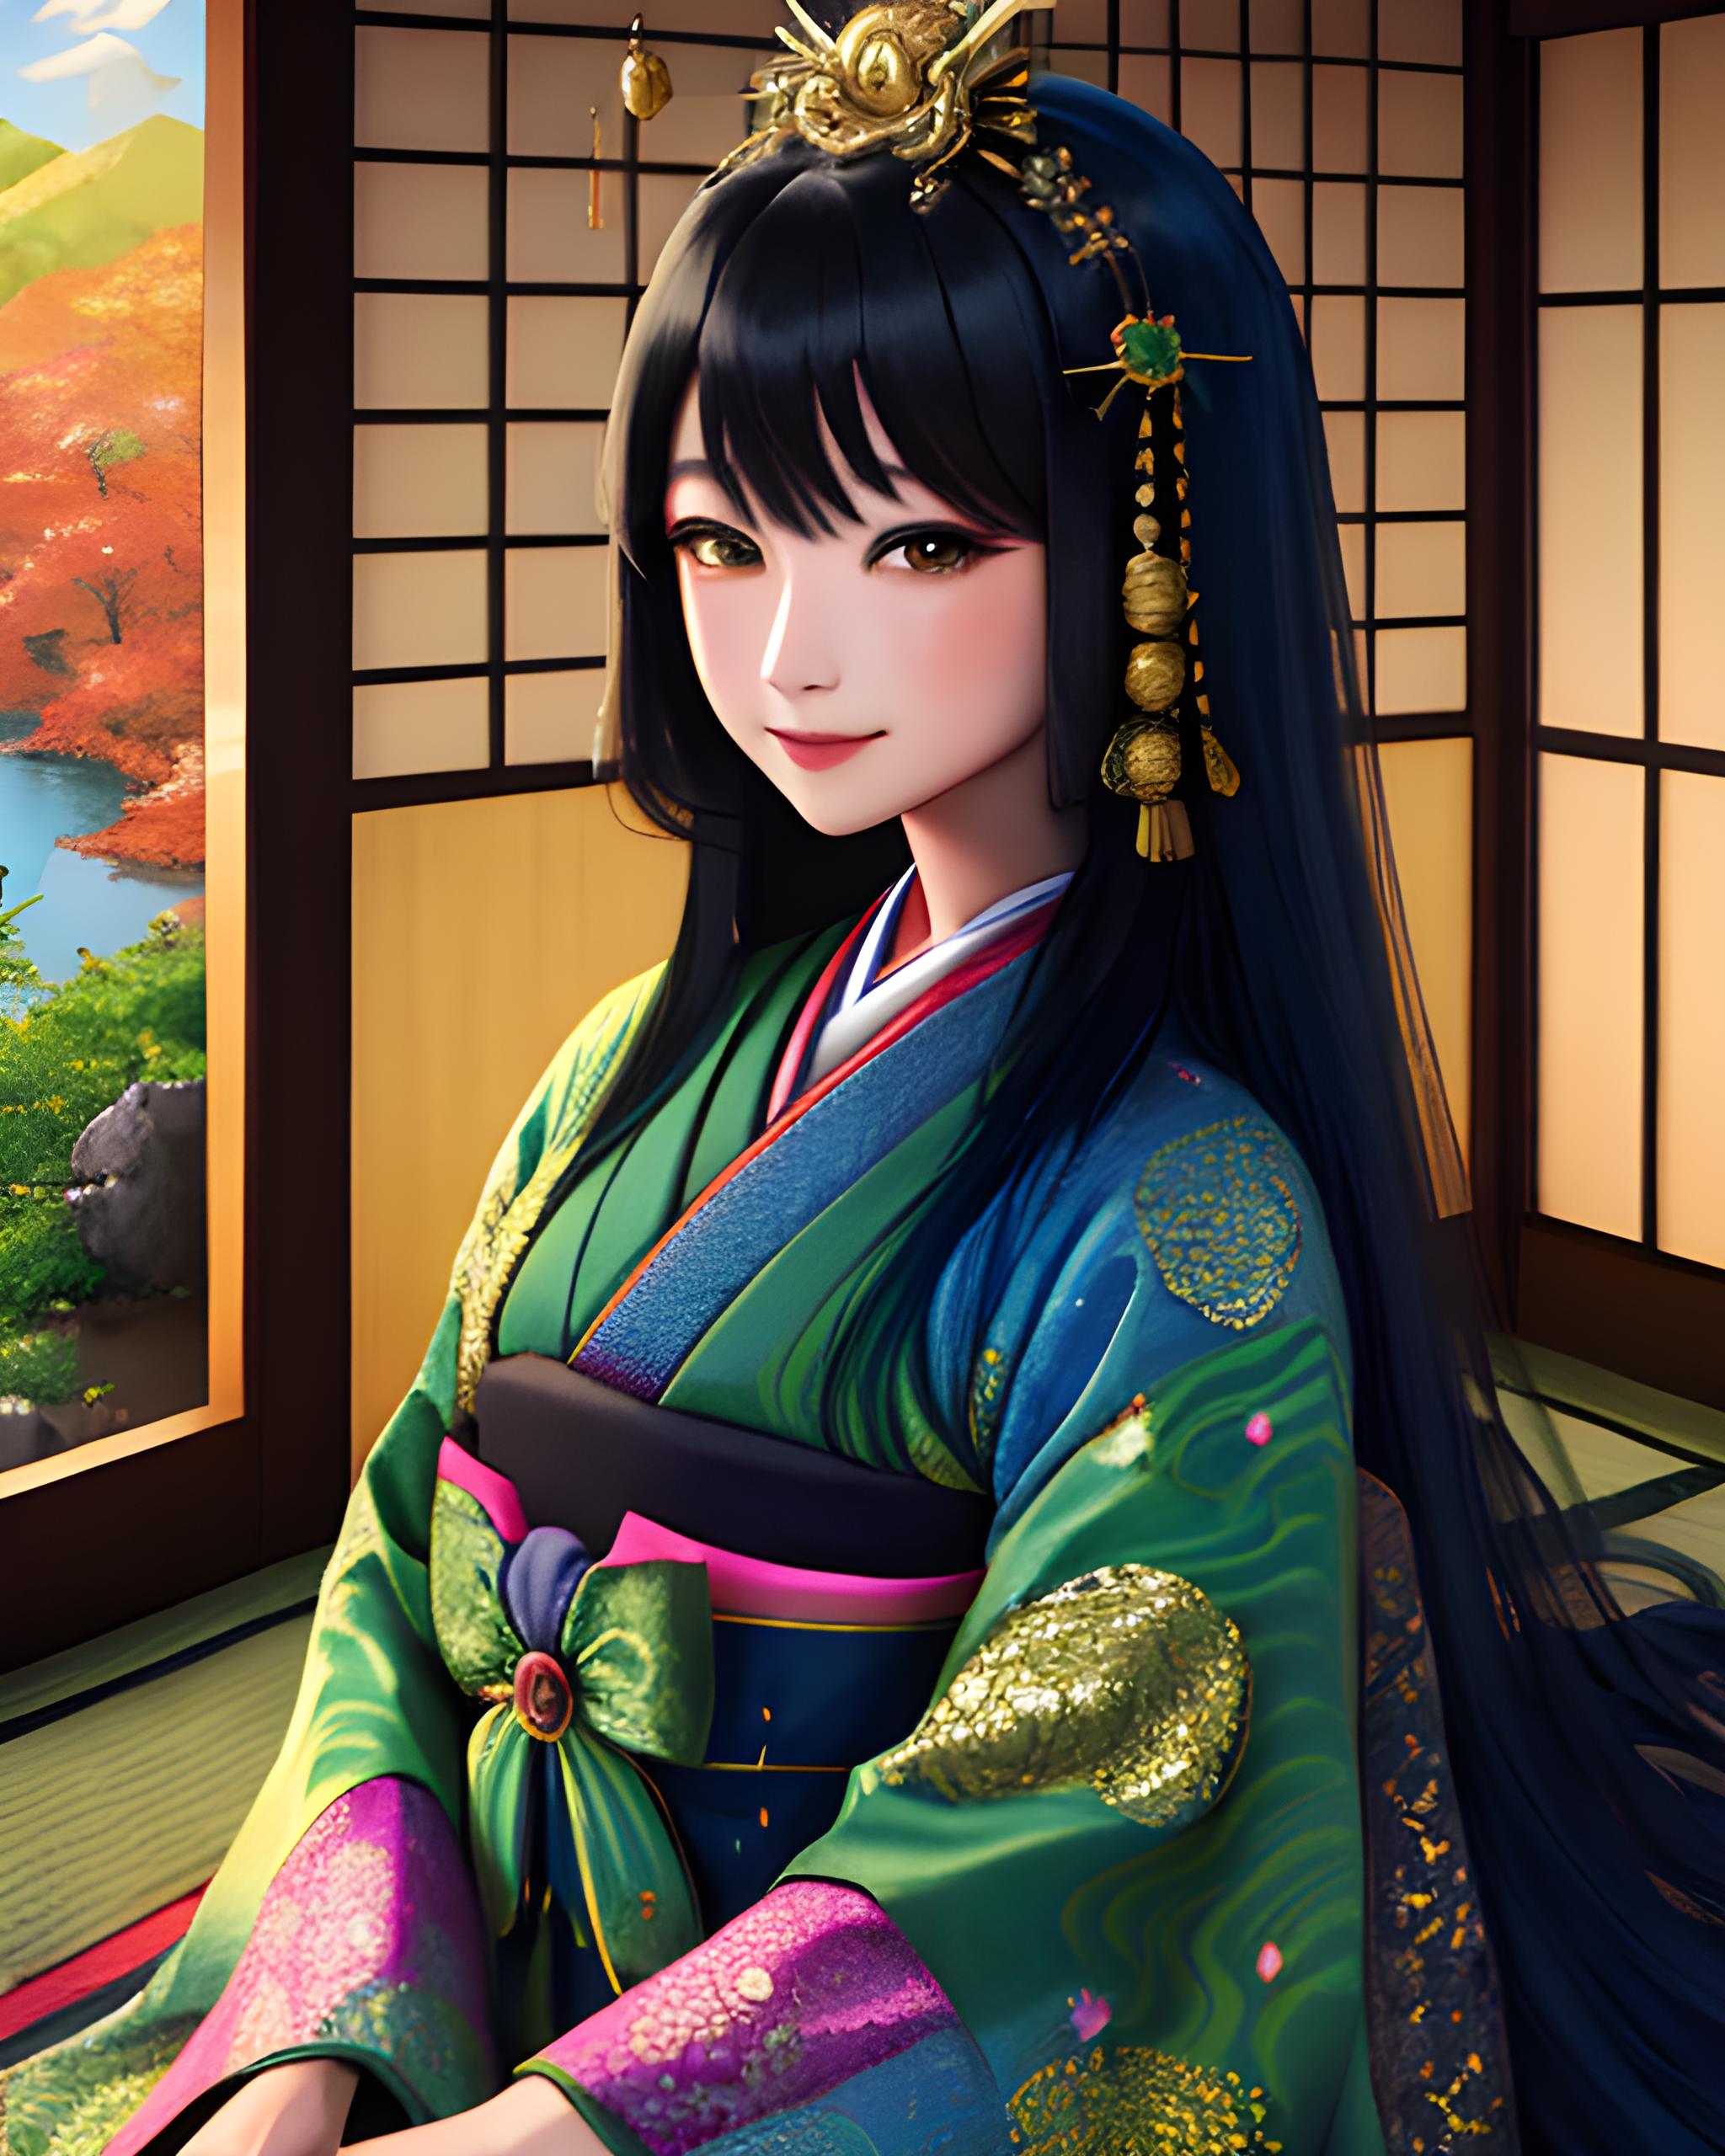 Juunihitoe - 12 Layer Kimono from Heian Era Japan image by KimiKoro